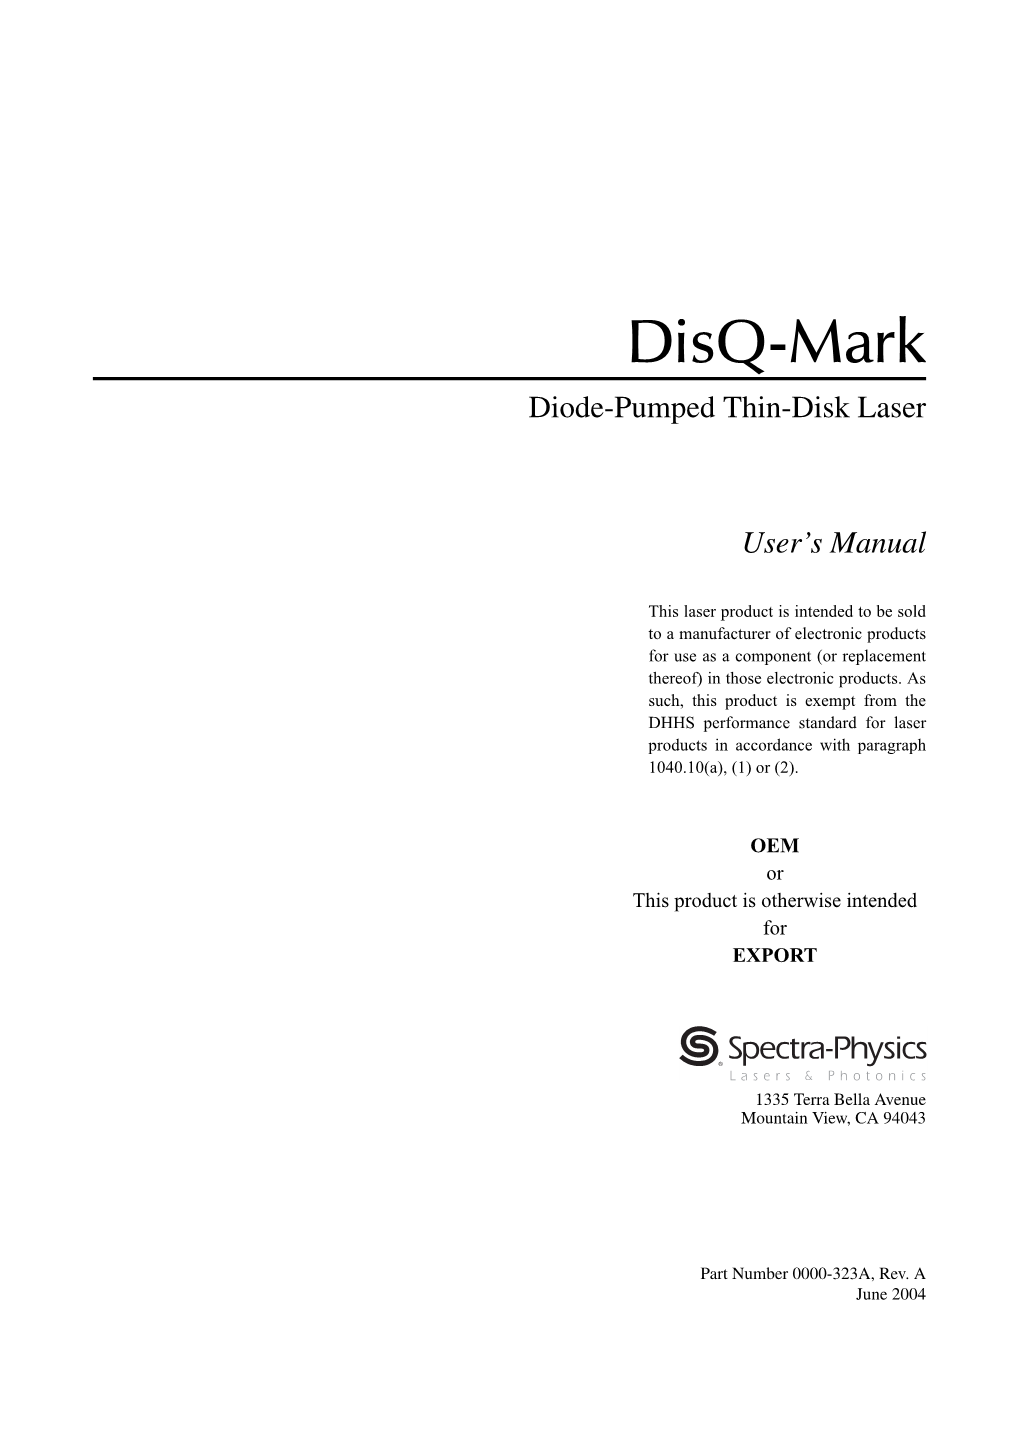 Disq-Mark Diode-Pumped Thin-Disk Laser